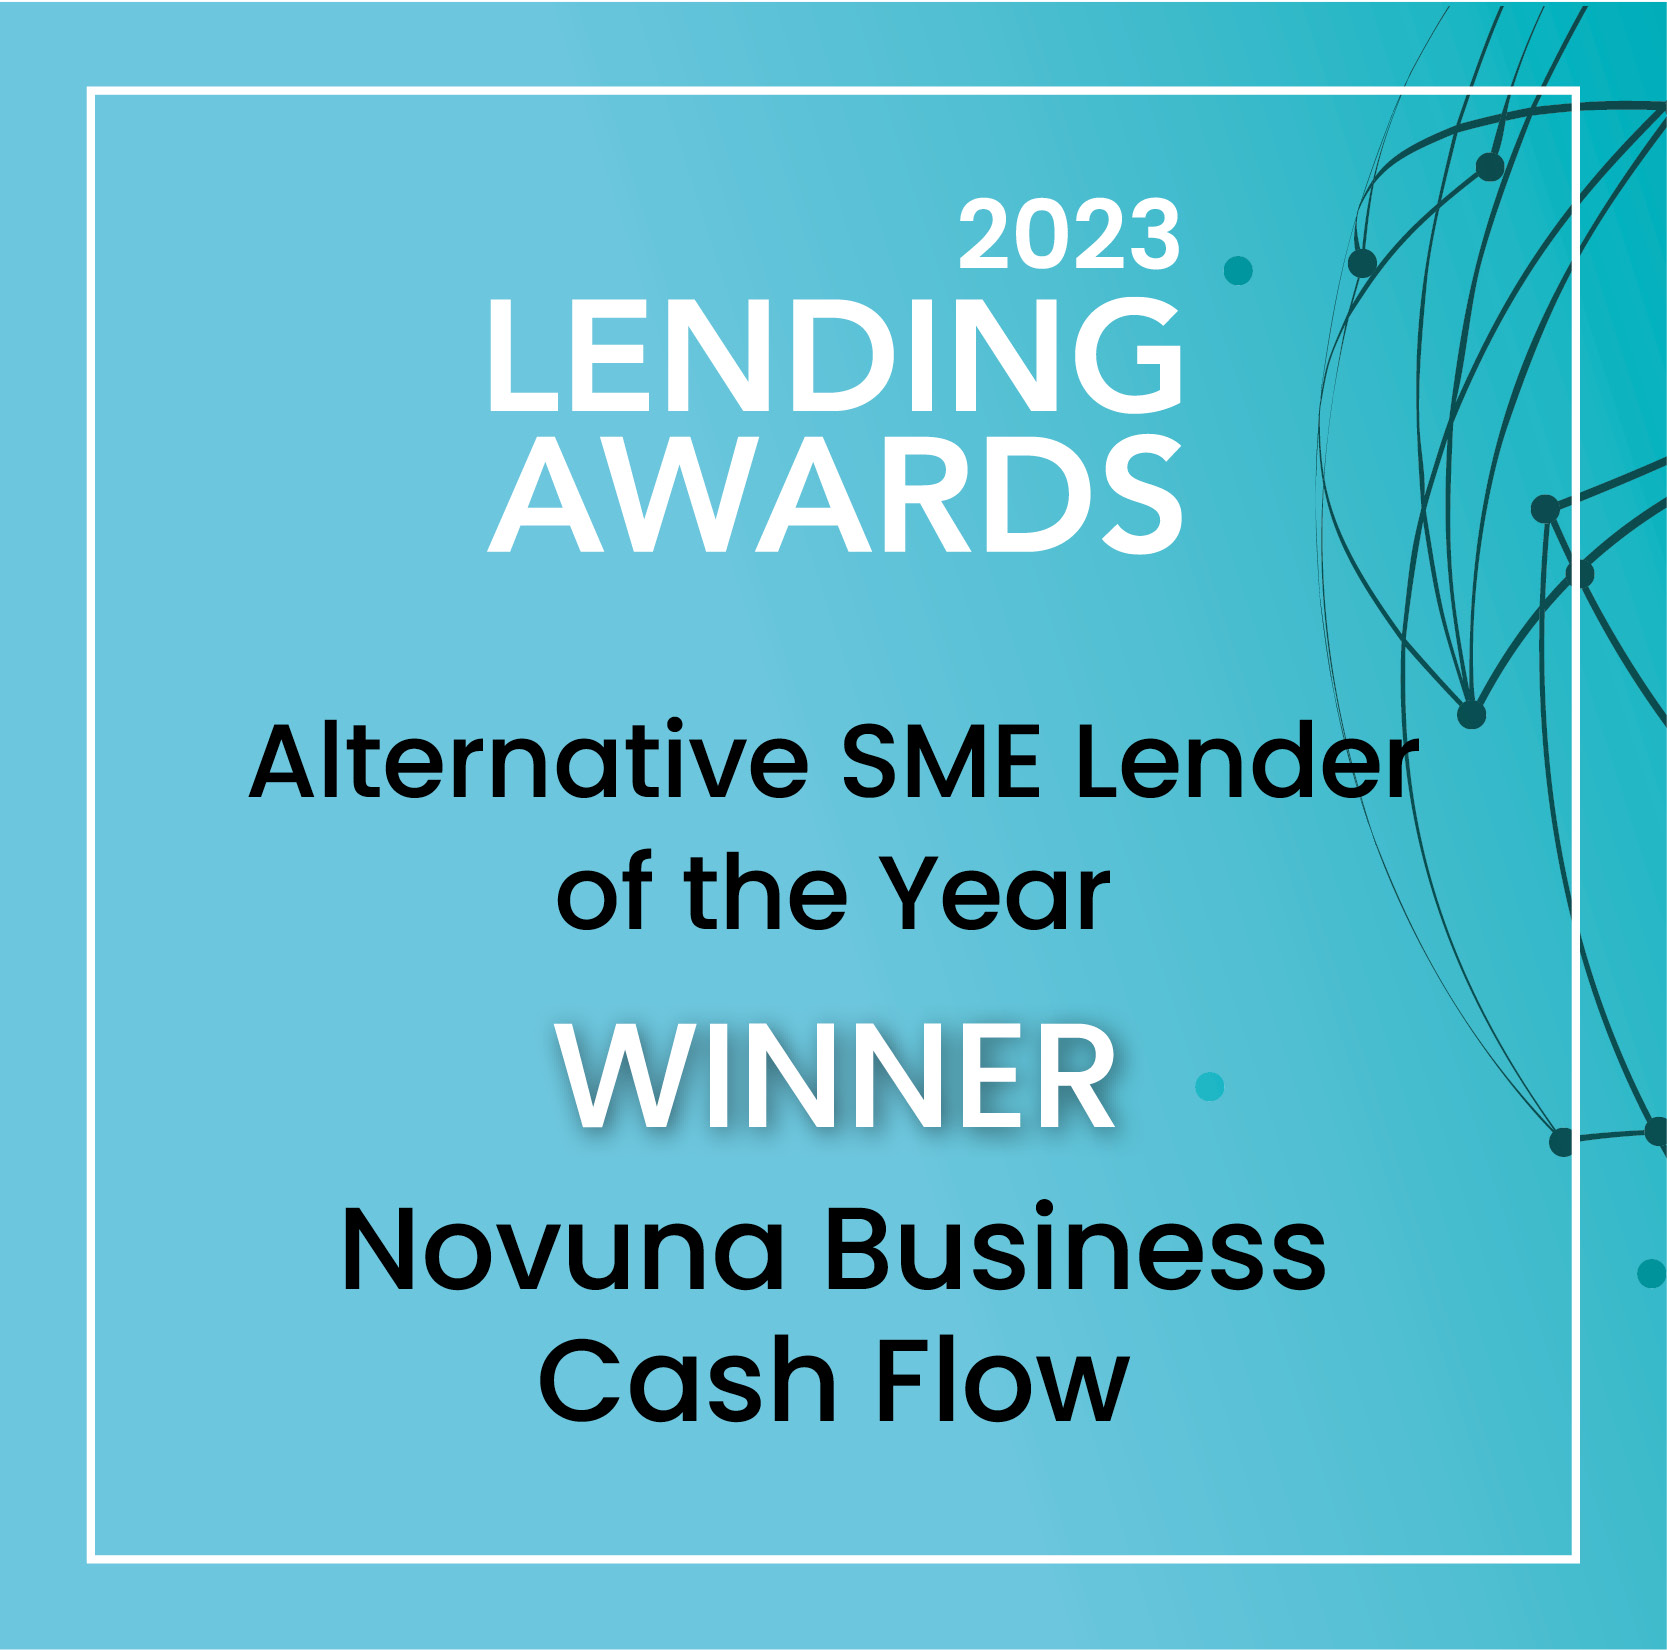 Alternative SME Lender of the Year 2023